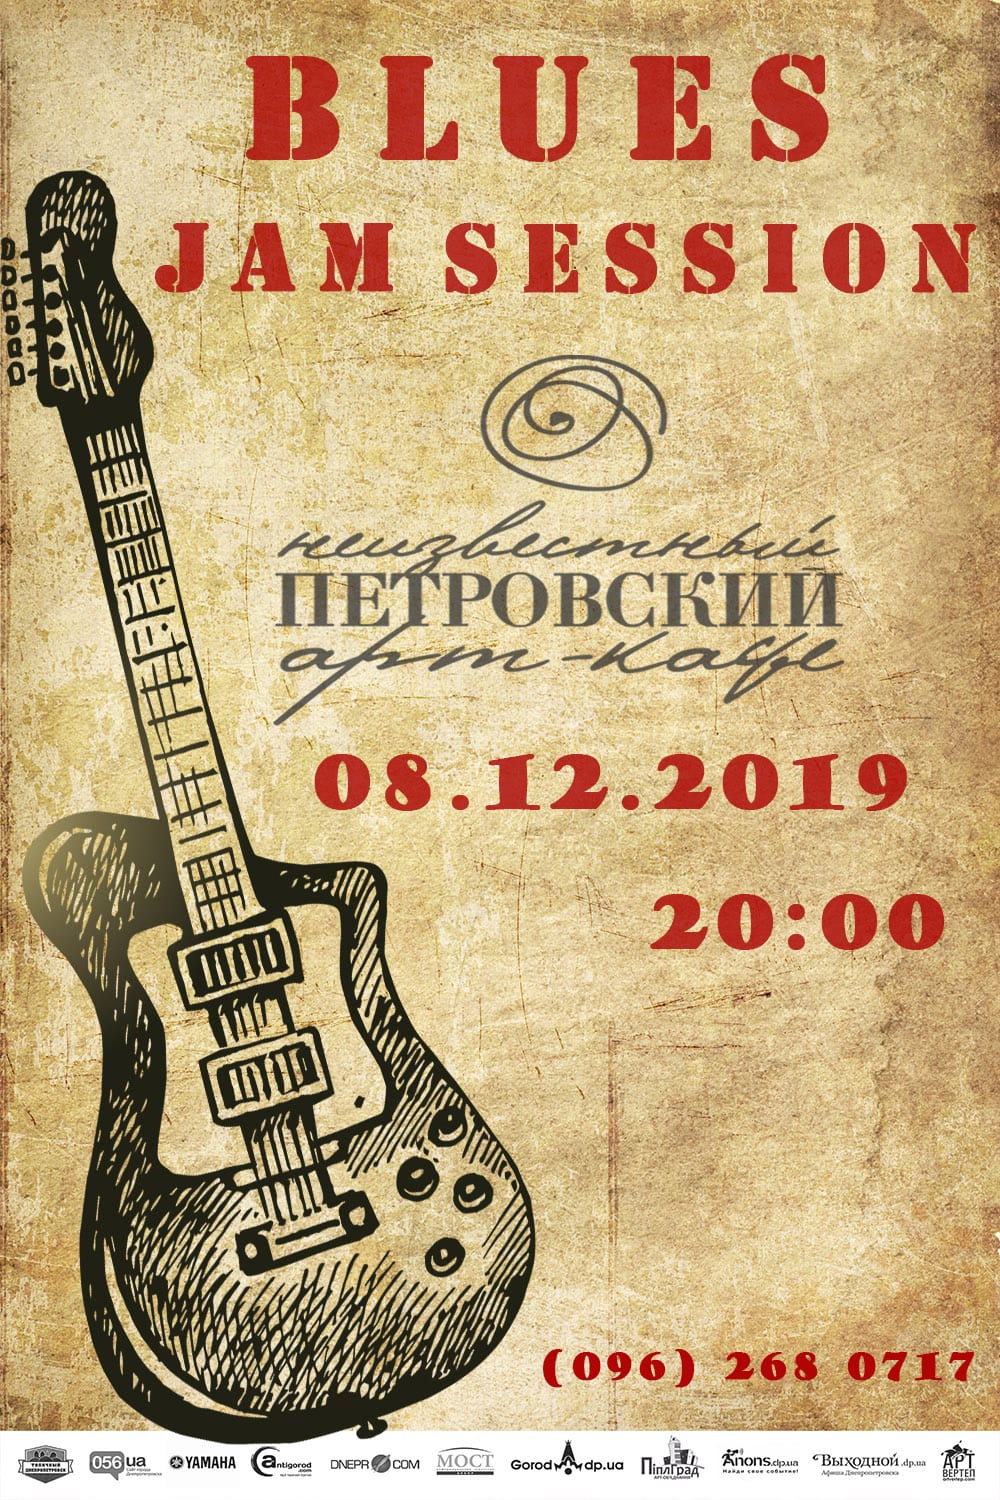 Blues jam session Днепр, 08.12.2019, цена, даты, купить билеты. Афиша Днепра